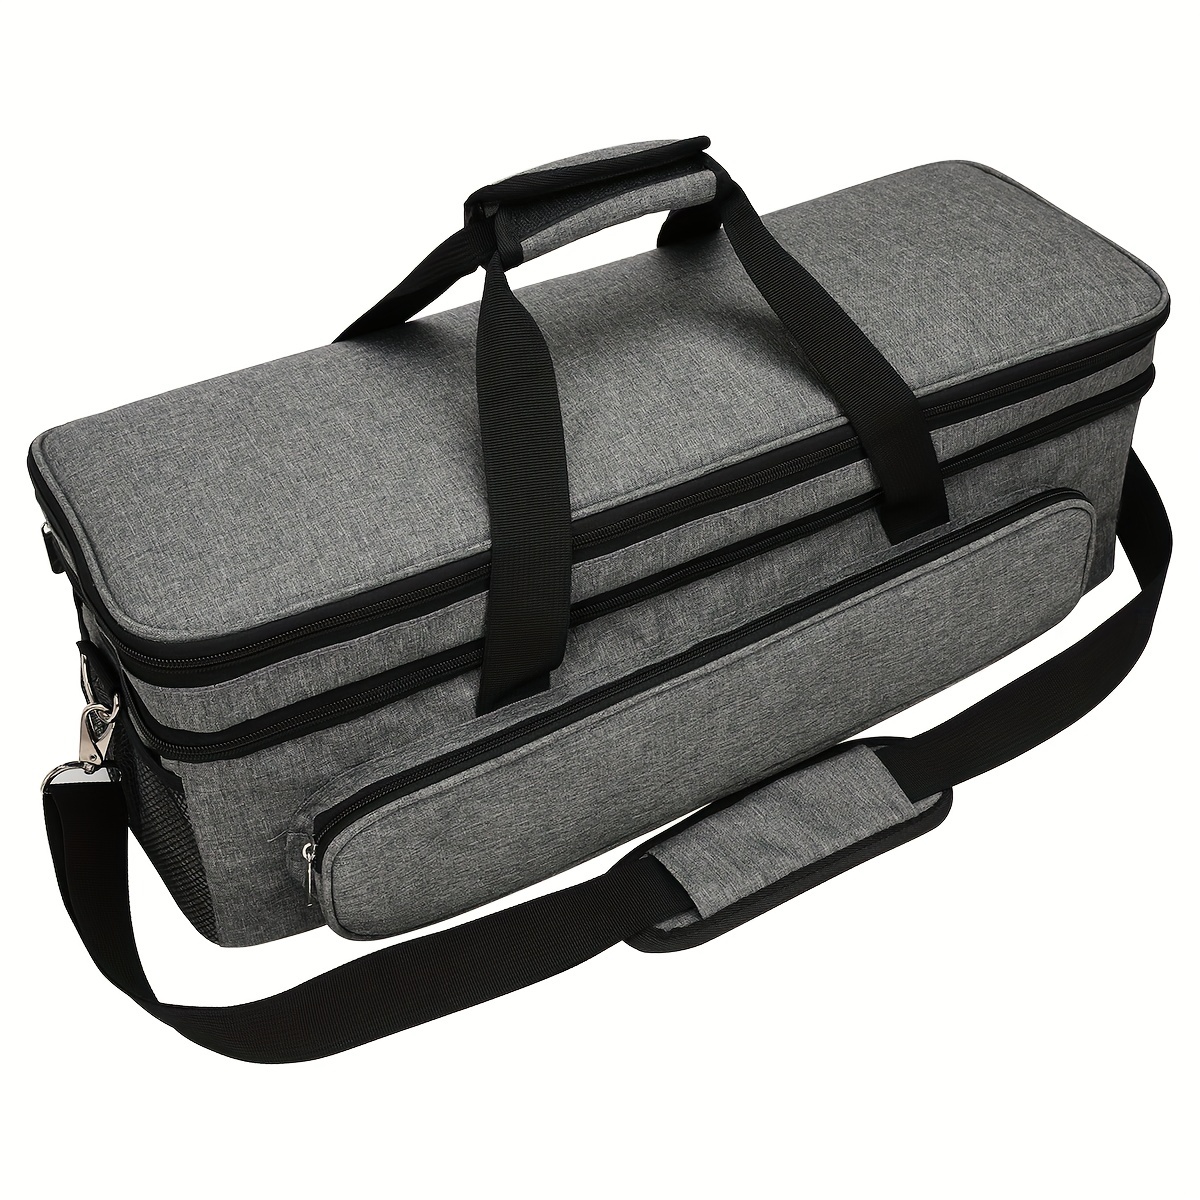 New Carrying Case Compatible With Cricut Maker 3, Cricut Explore 3,Cricut